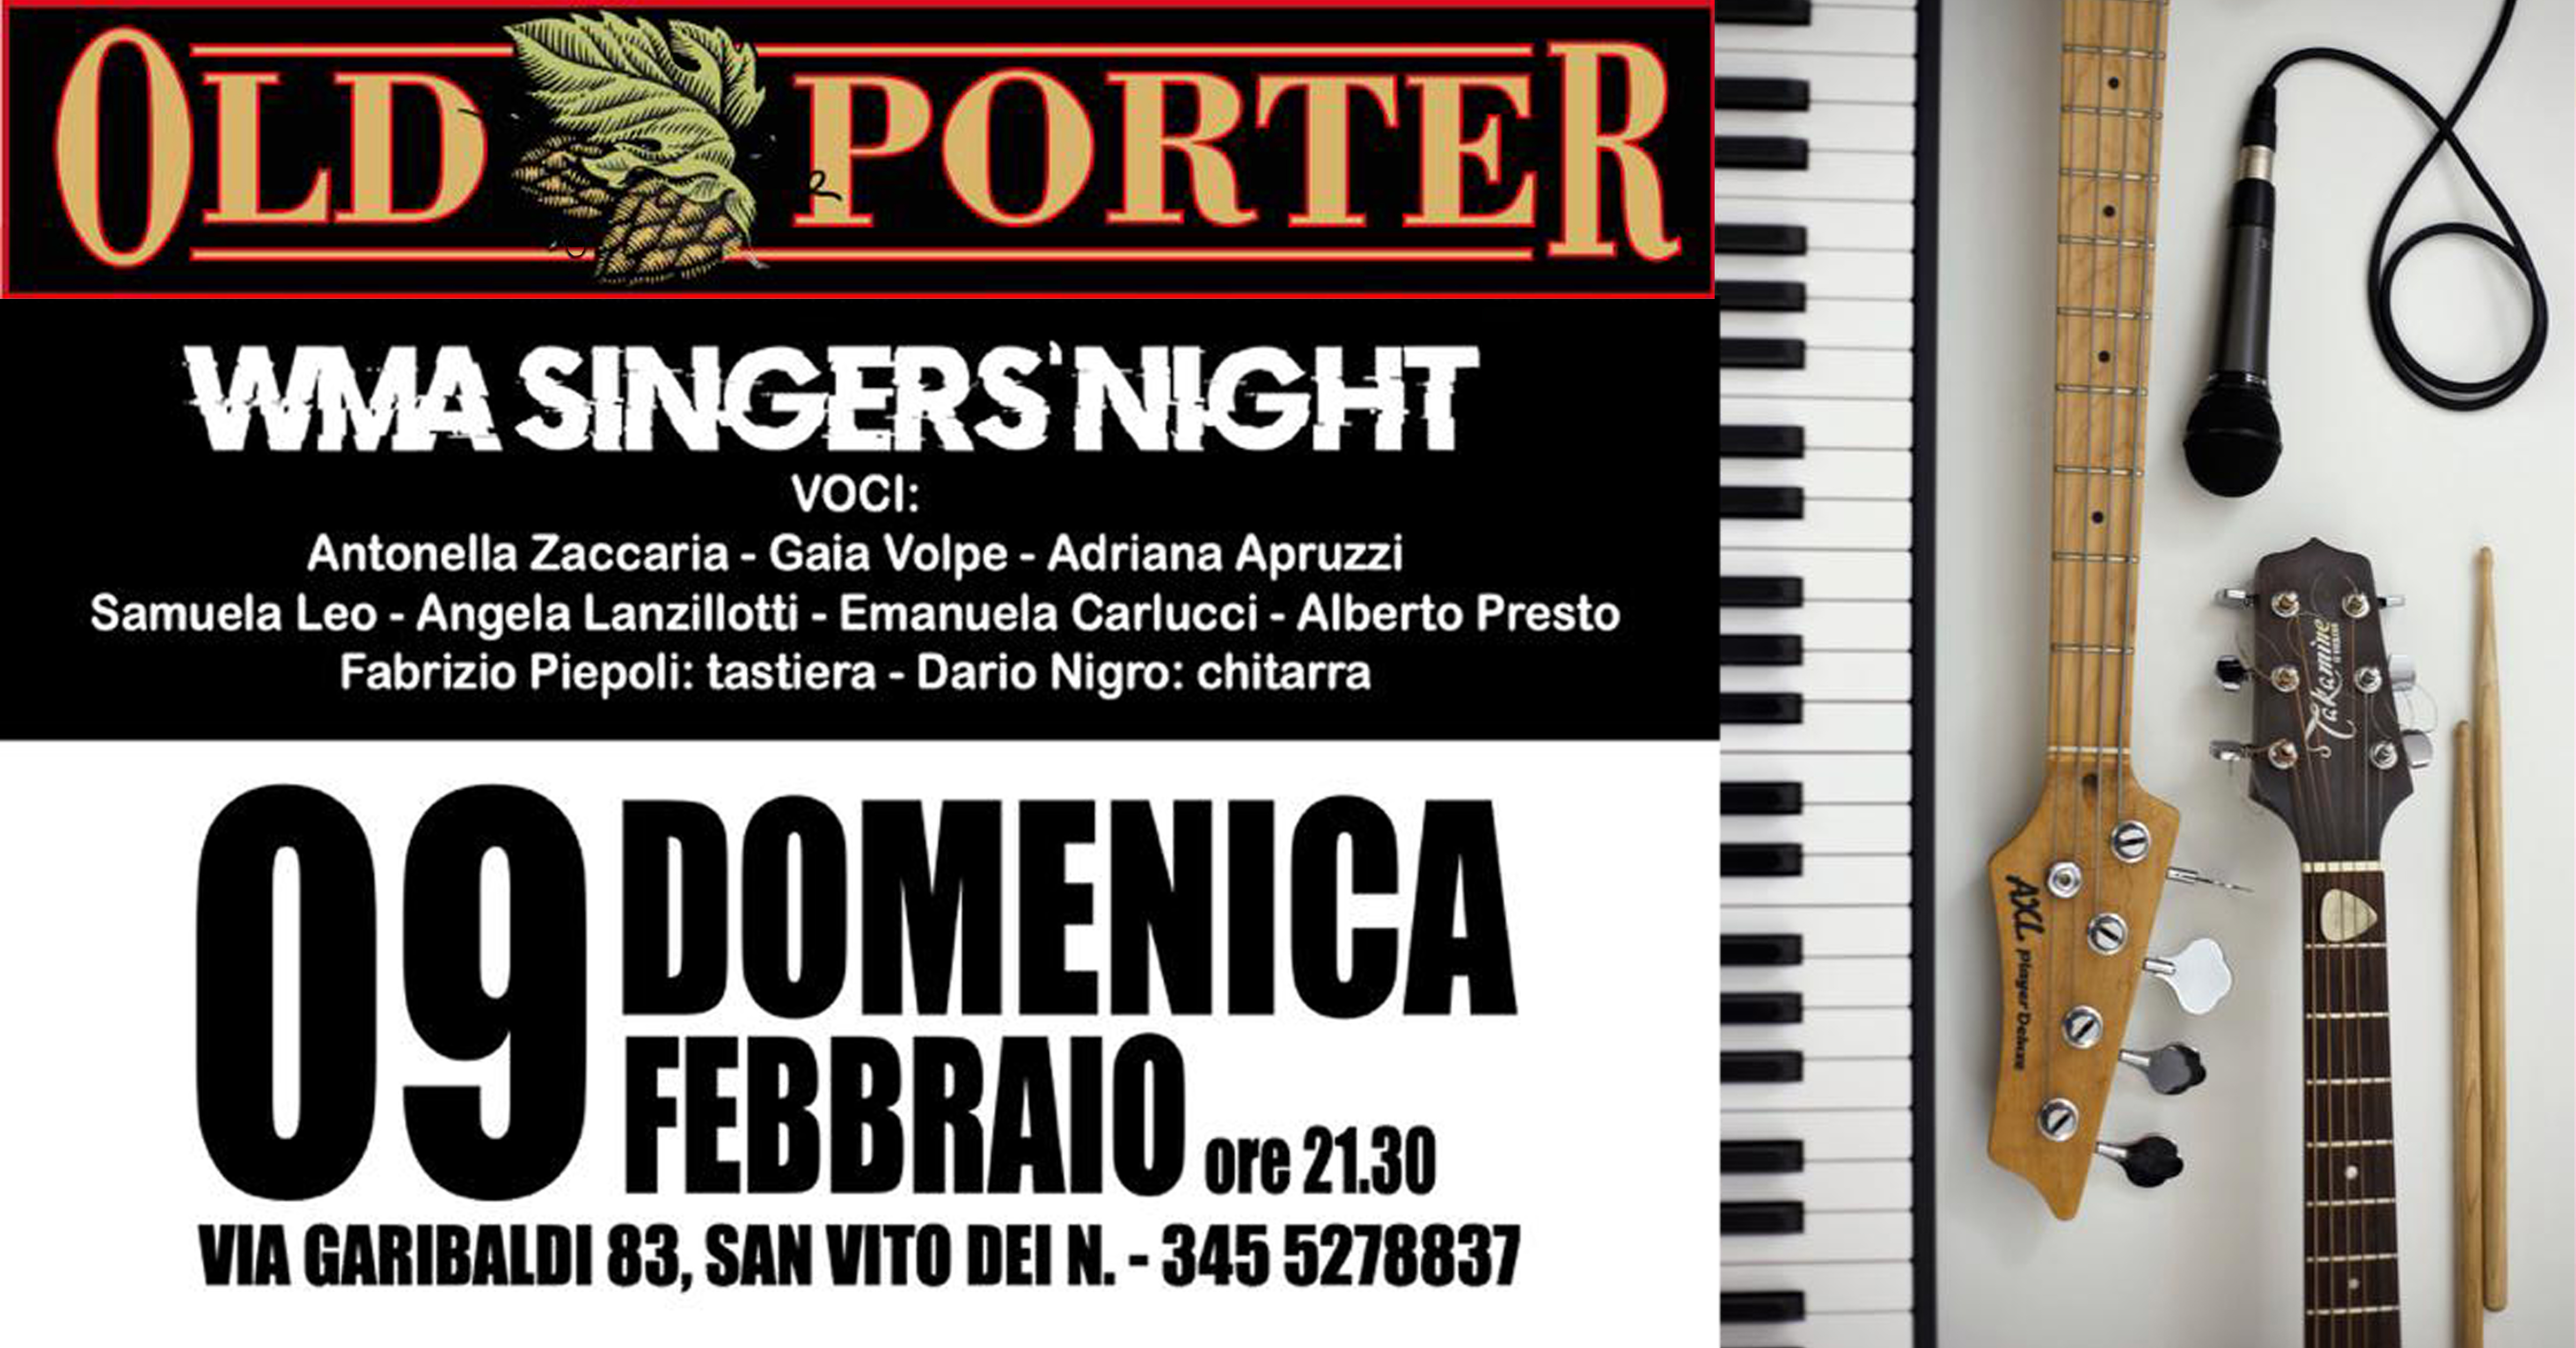 Singer, concert, canto, concerto, fabrizio piepoli, old porter, allievi